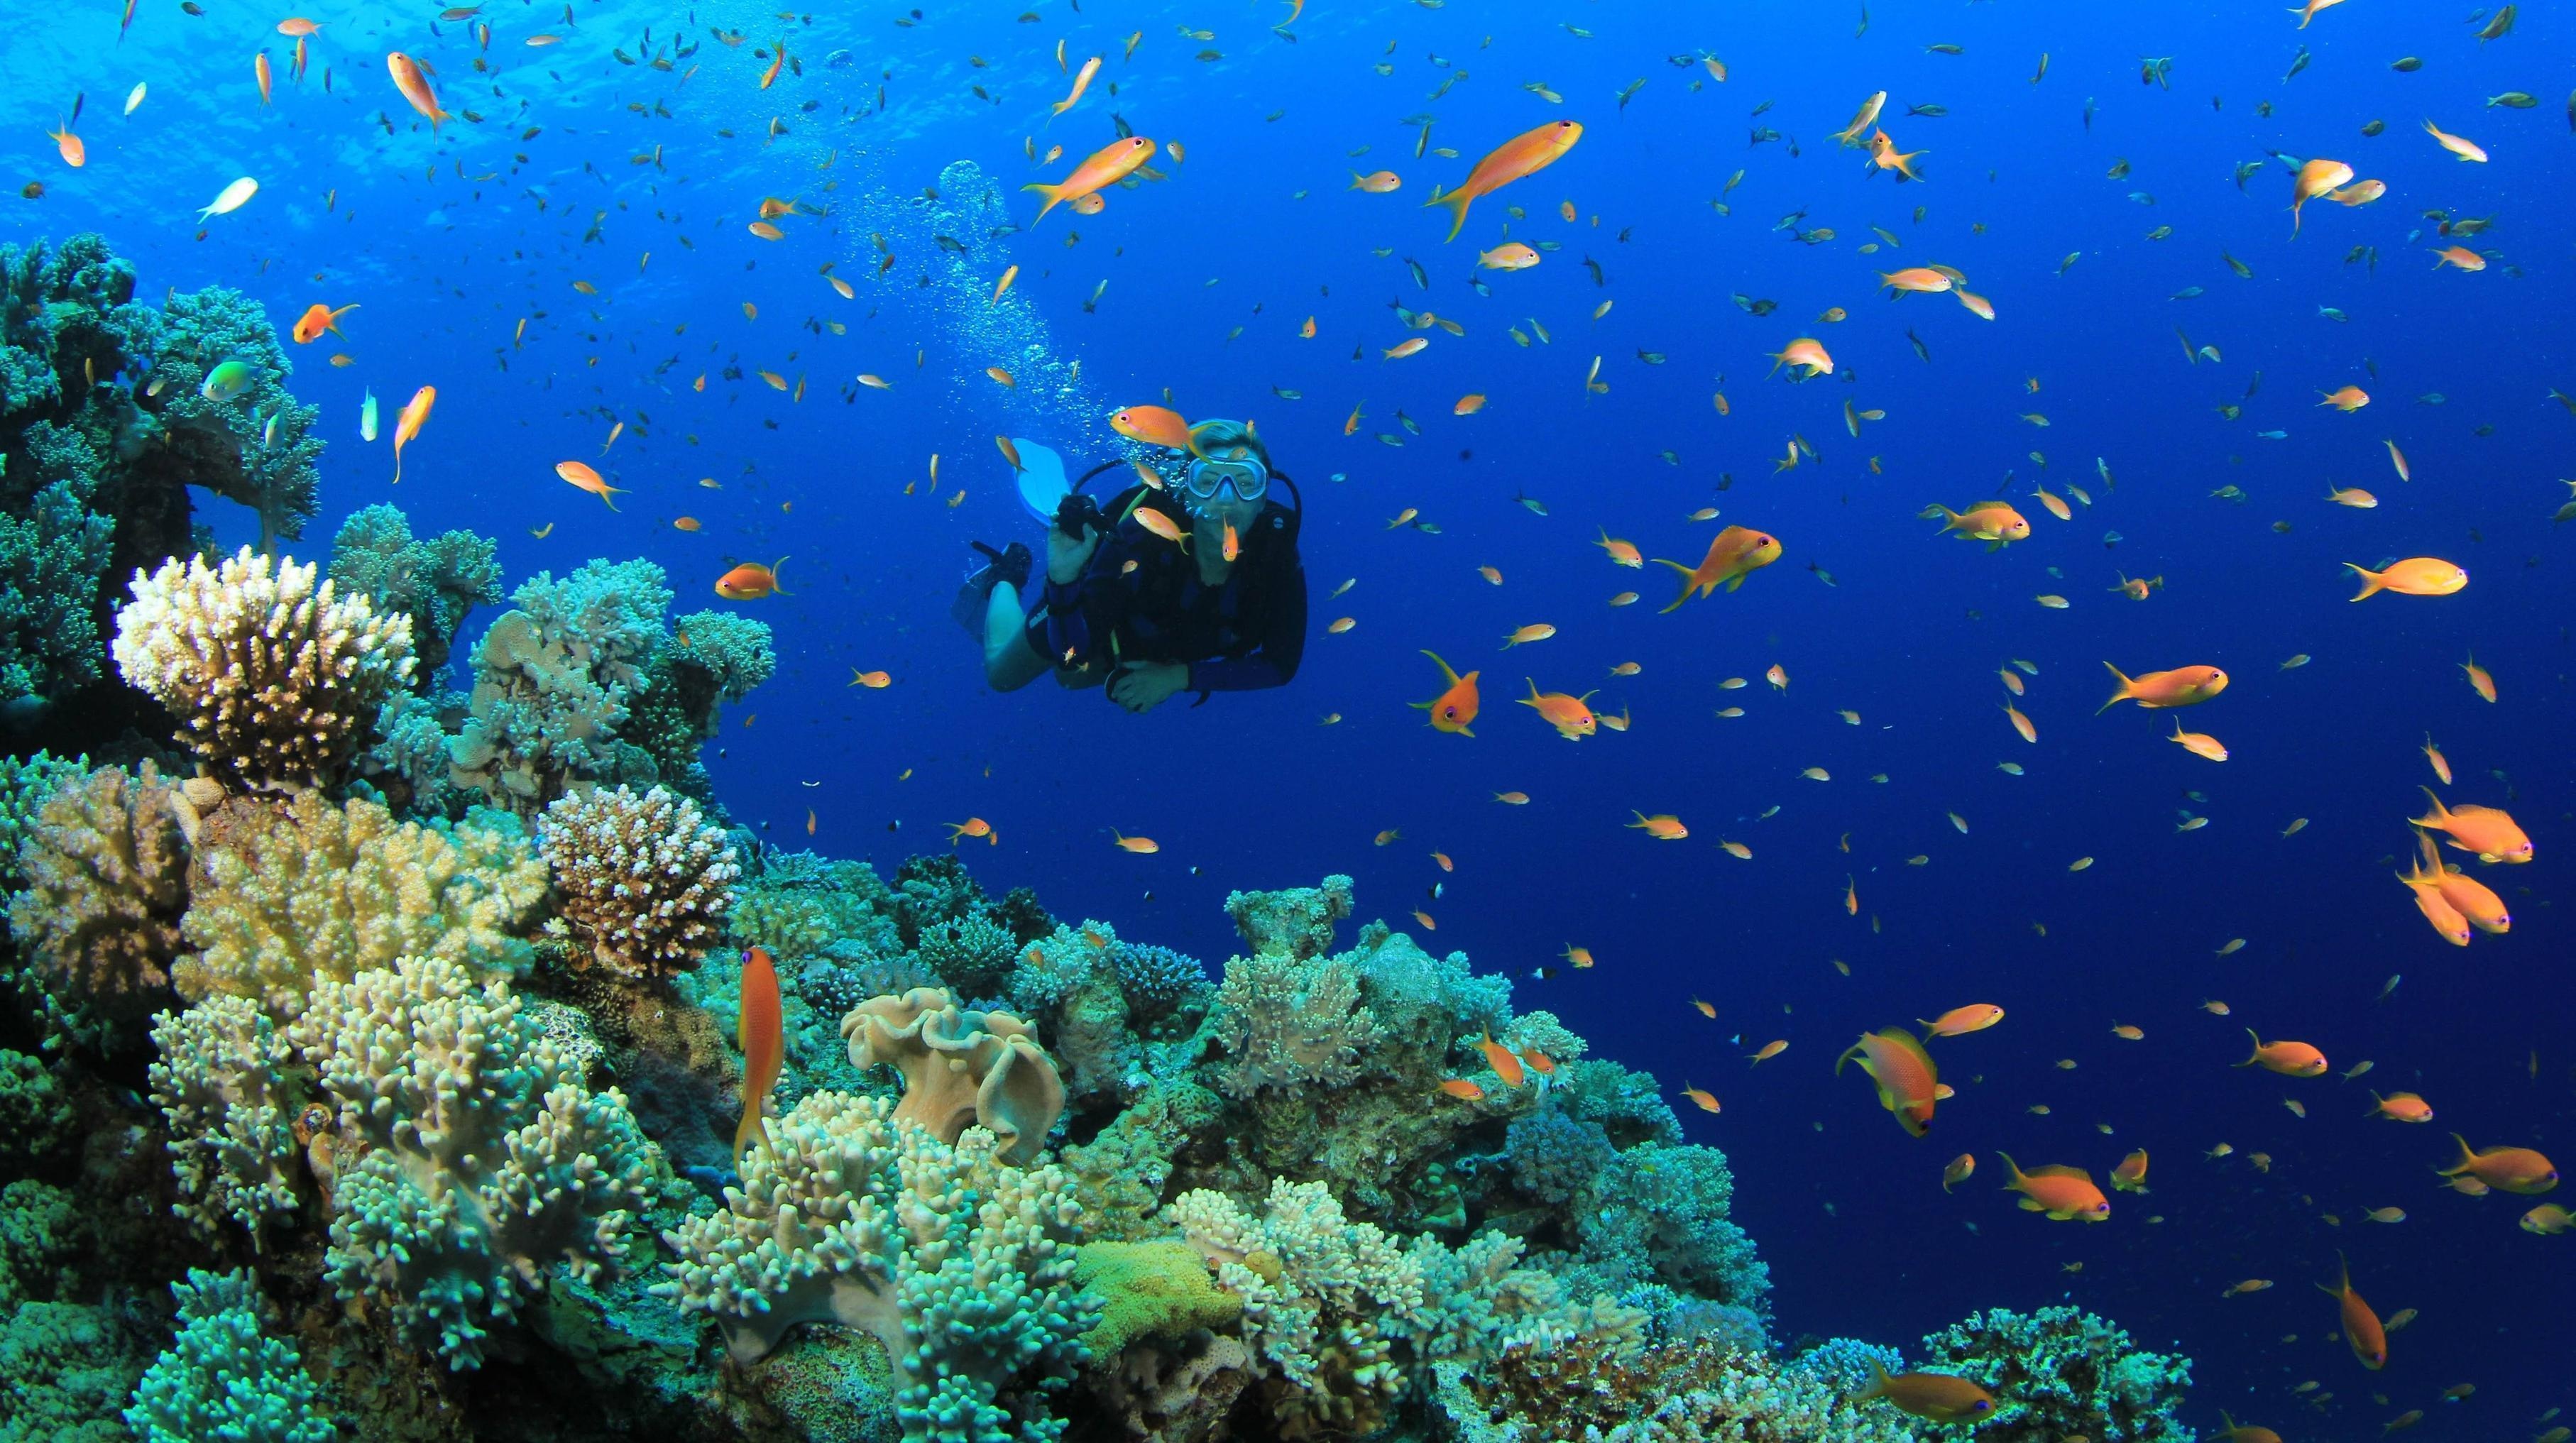 Diving: Exploring coral reefs, Recreational and scientific underwater activity. 3630x2040 HD Wallpaper.